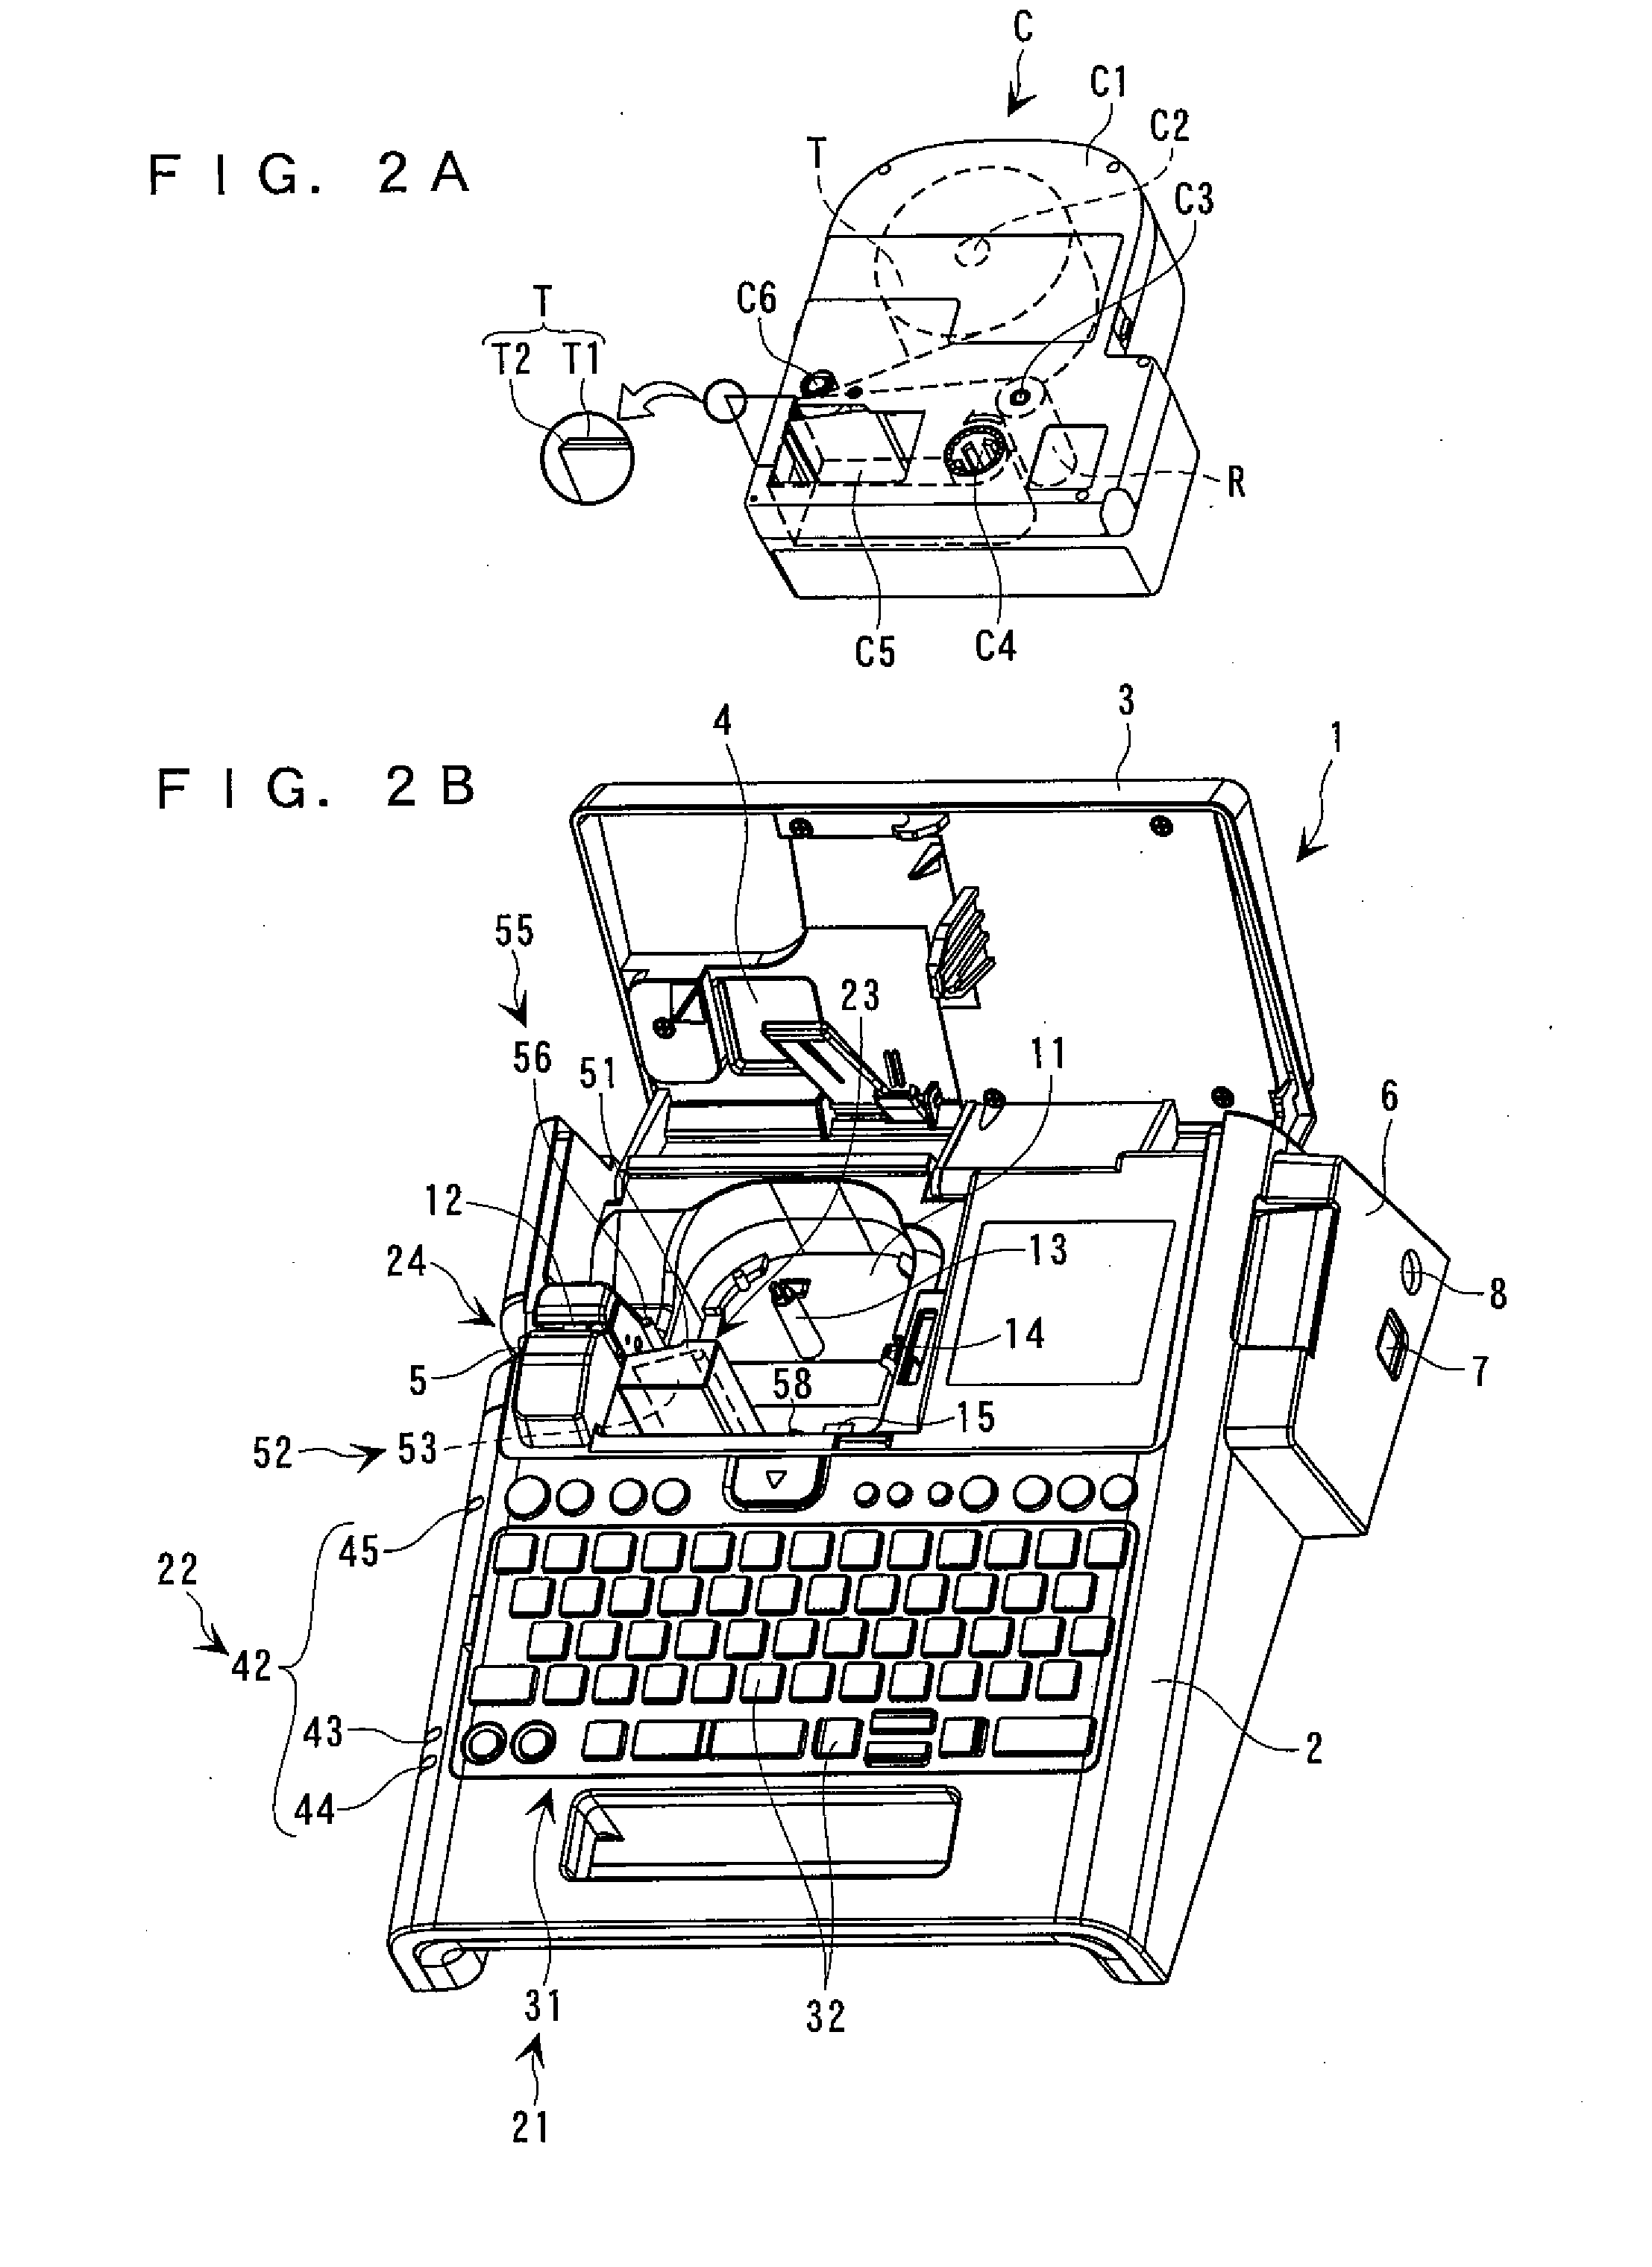 Cutter Unit, Half-Cutting Mechanism, and Tape Printer